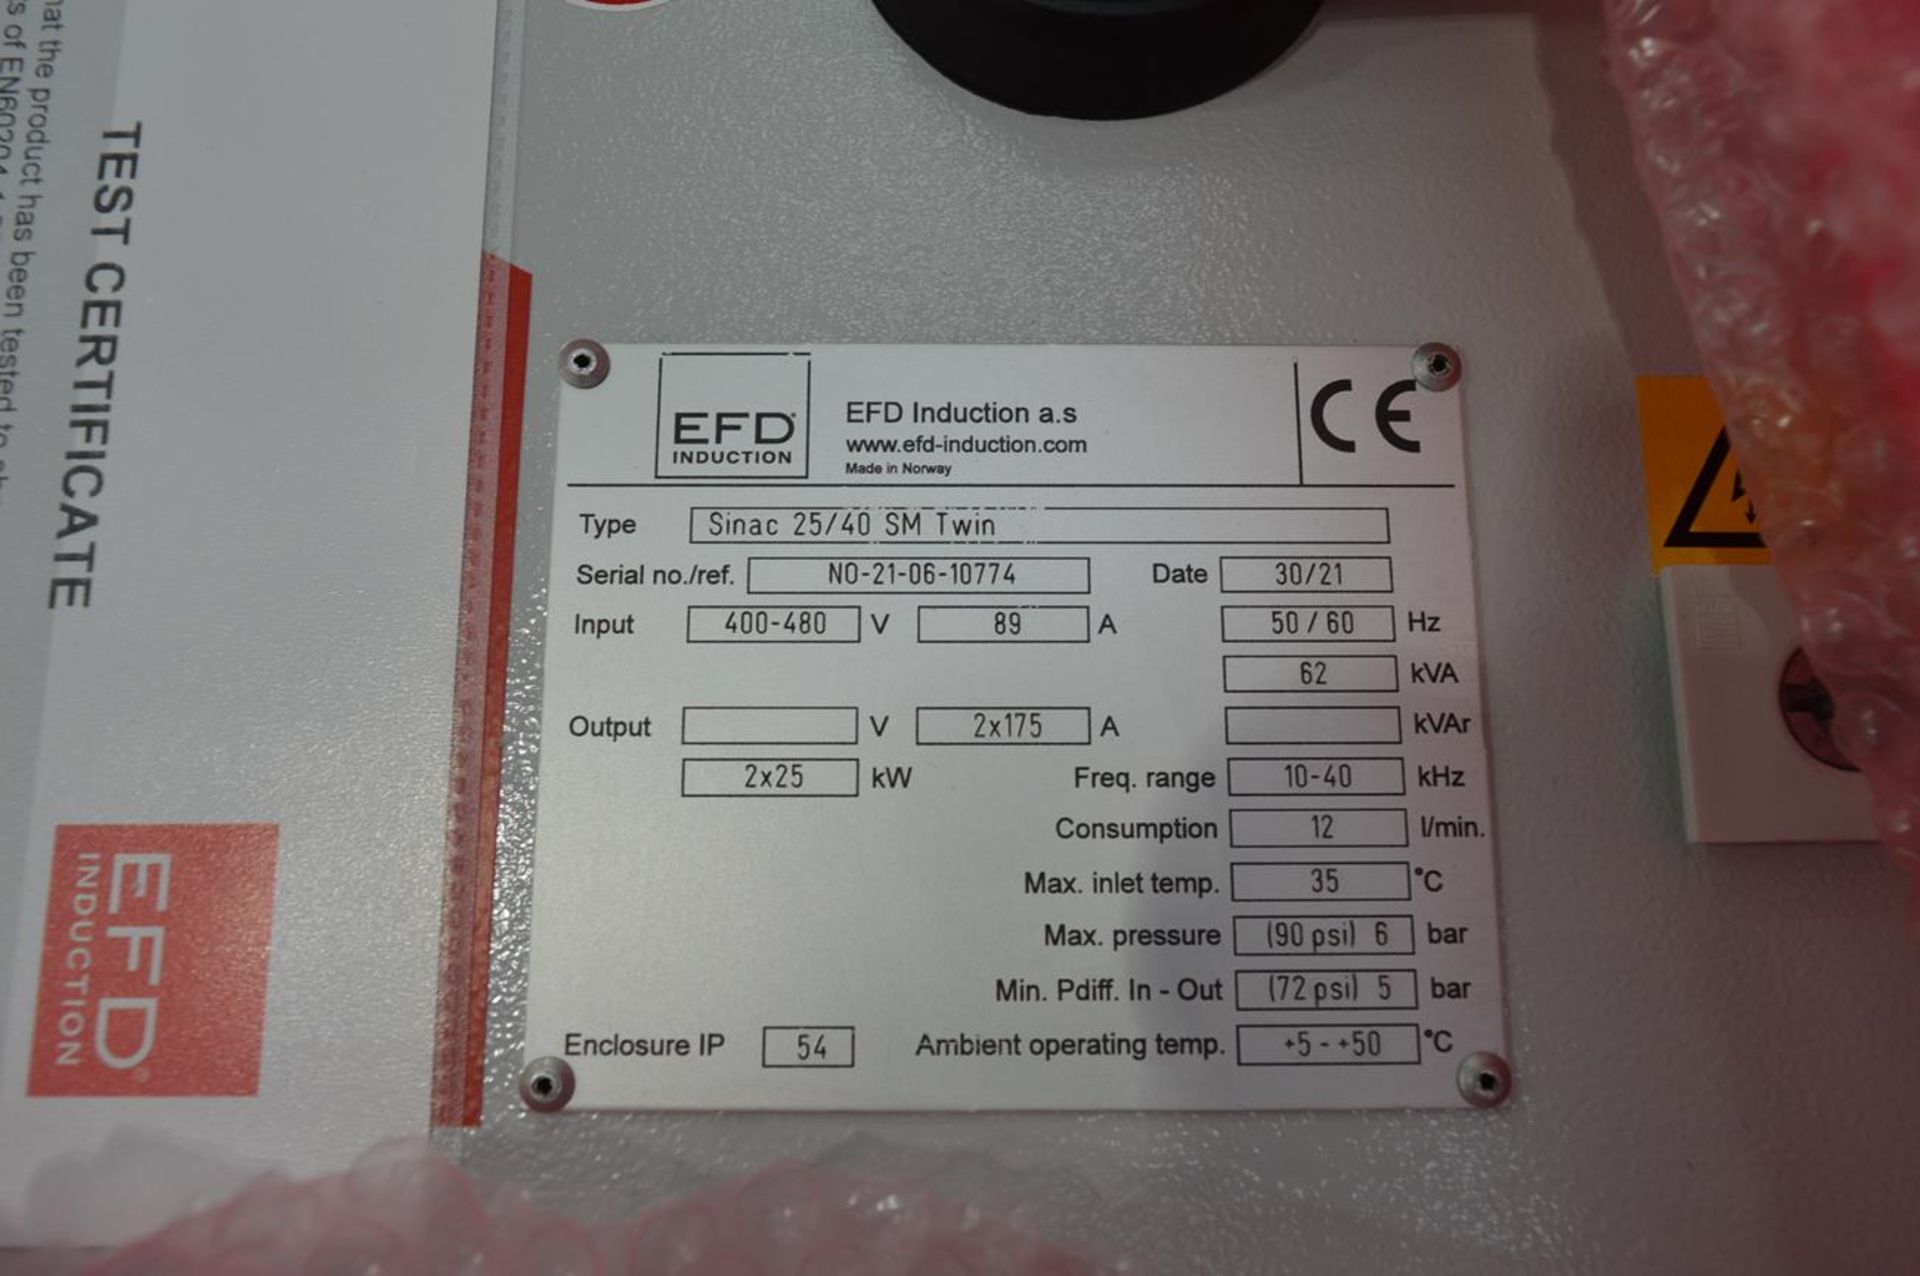 EFD, Sinac 25/40 SM twin medium frequency universal heat generator, Serial No. 21-06-10774 - Image 3 of 3